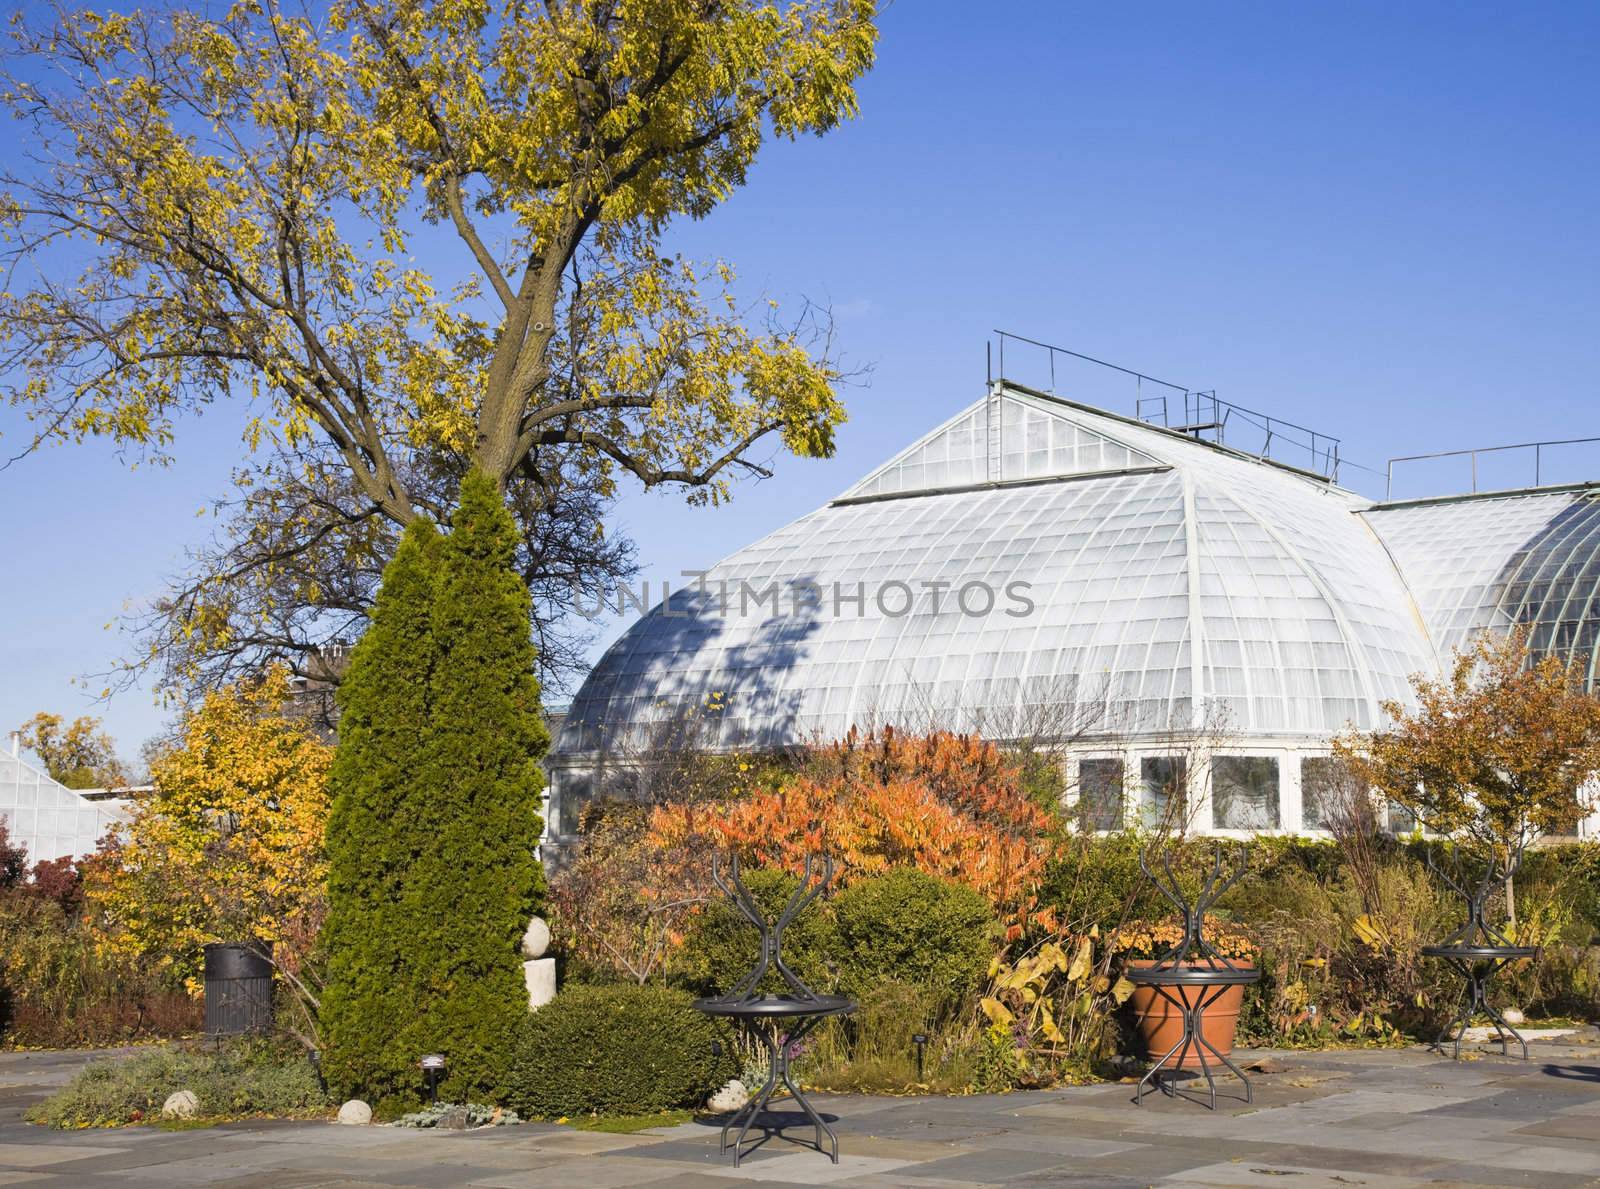 Garfield Park Conservatory  by benkrut